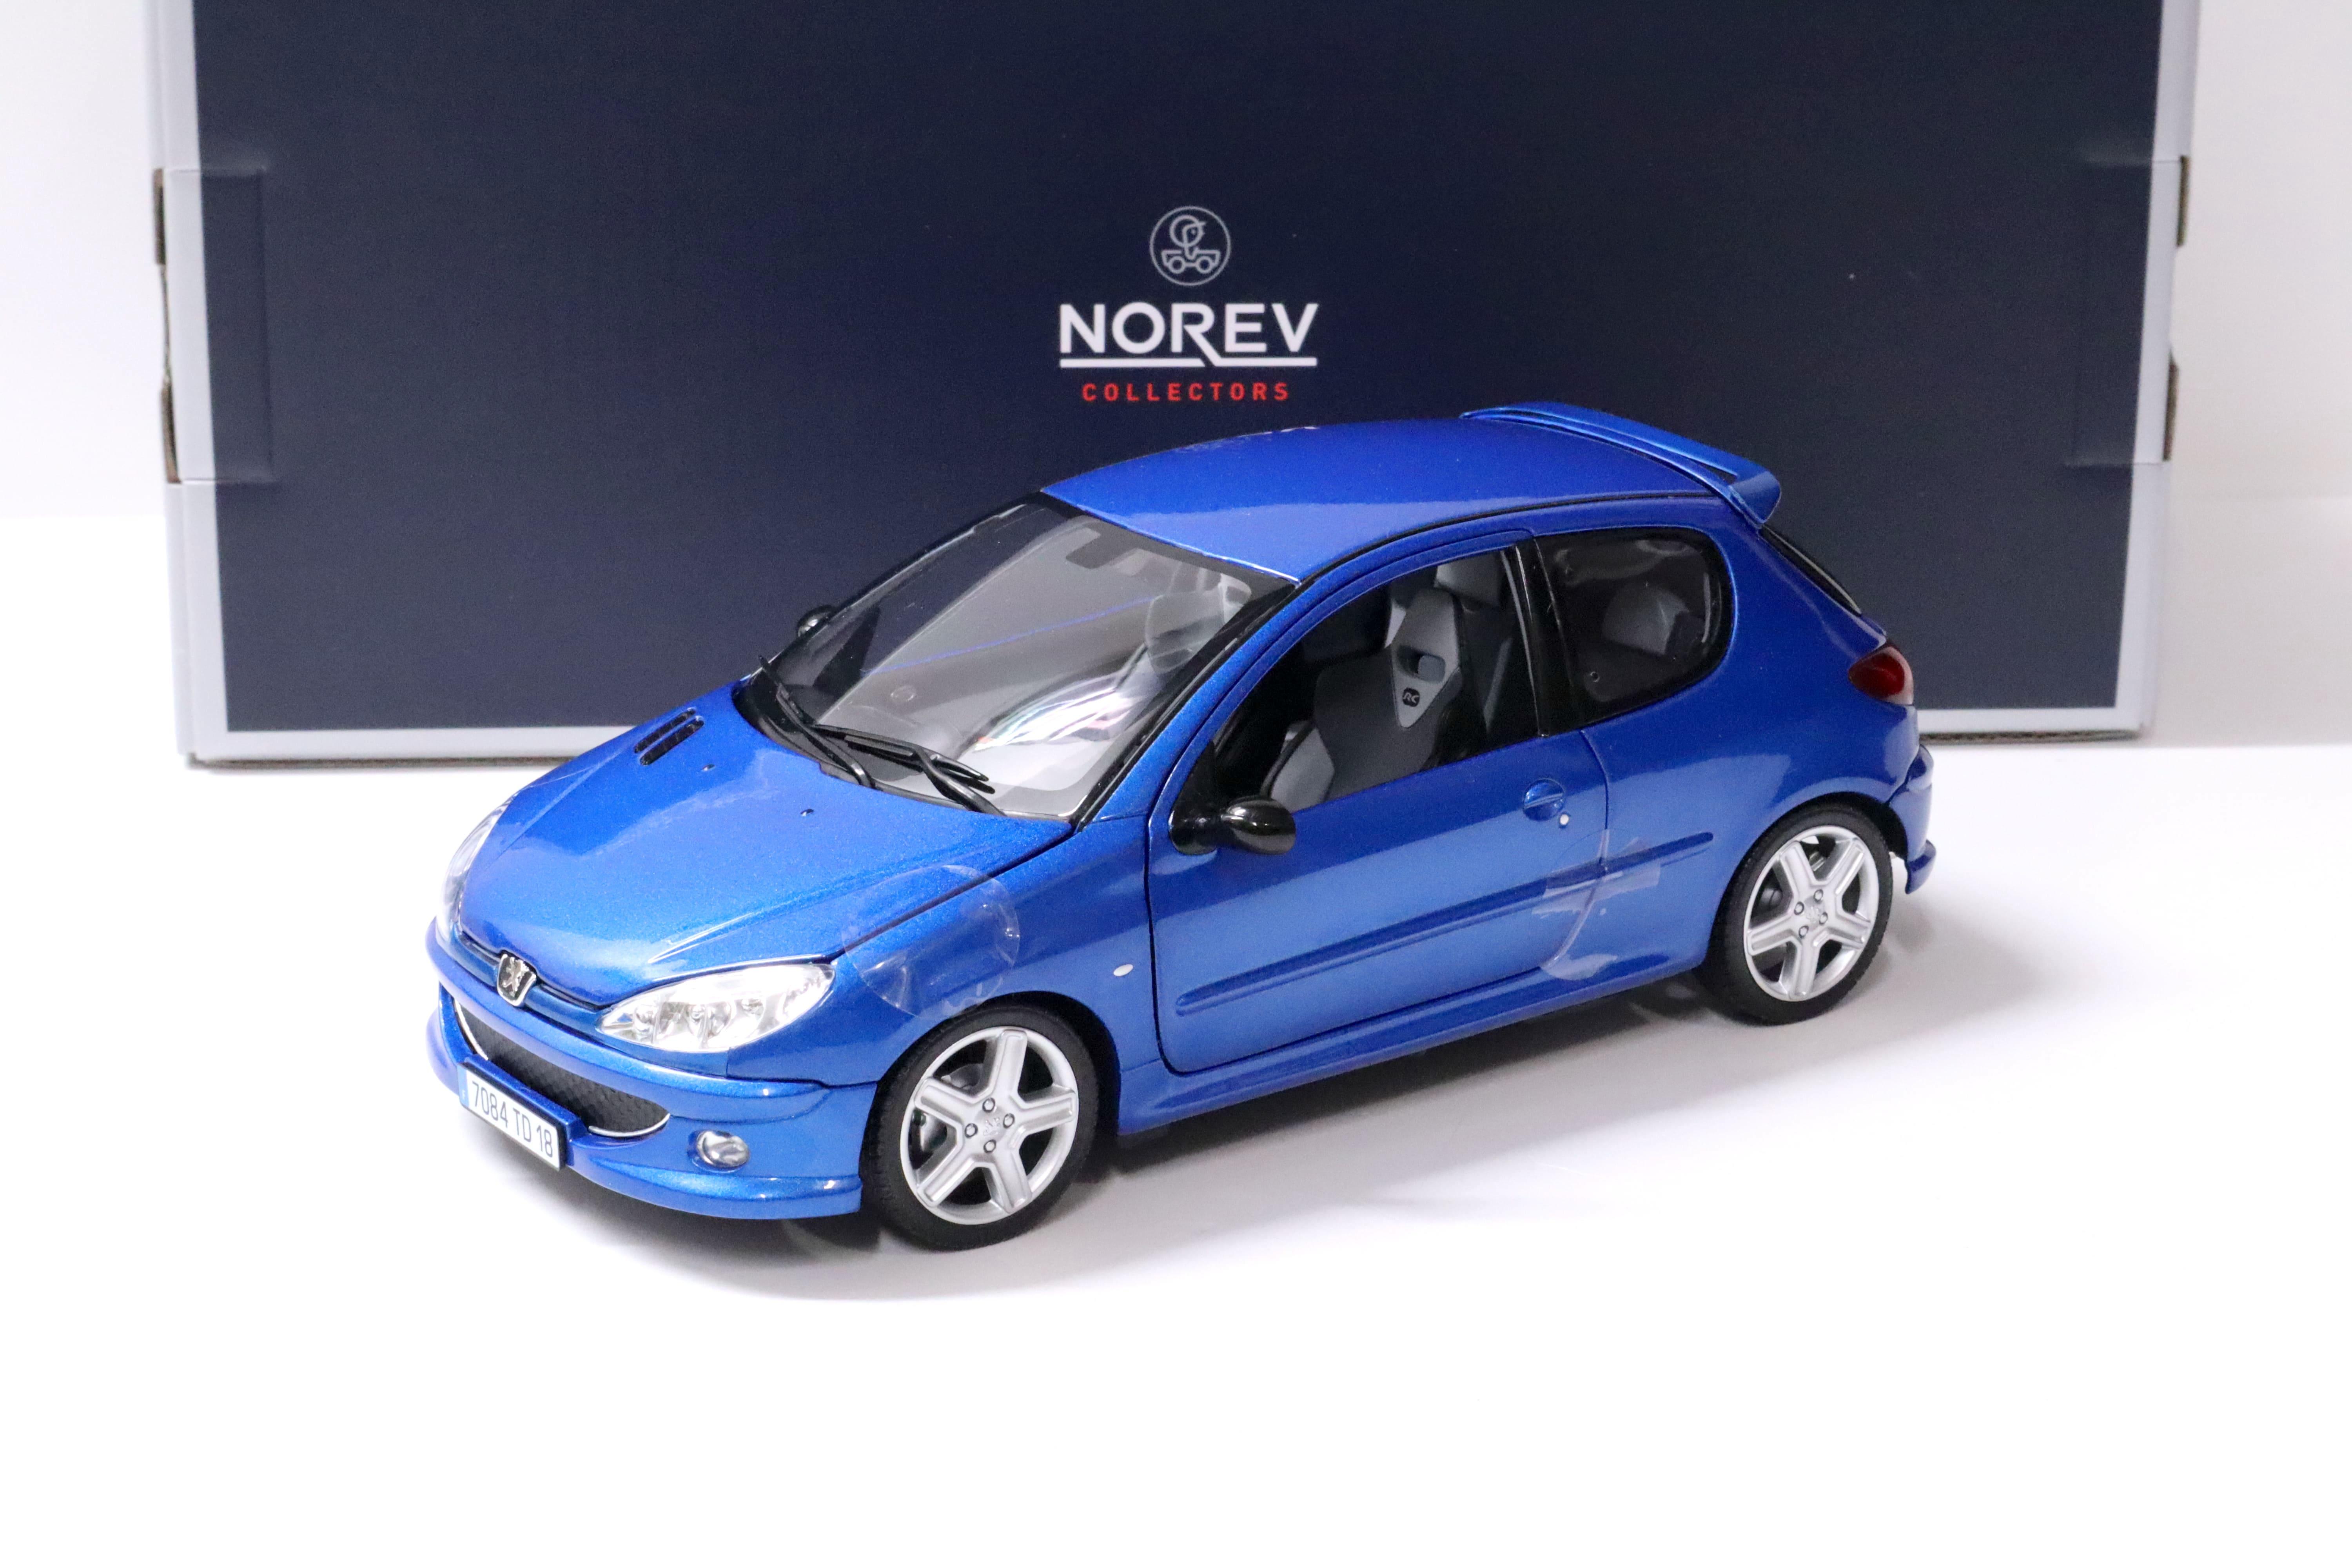 1:18 Norev Peugeot 206 RC Recif blue metallic 2003